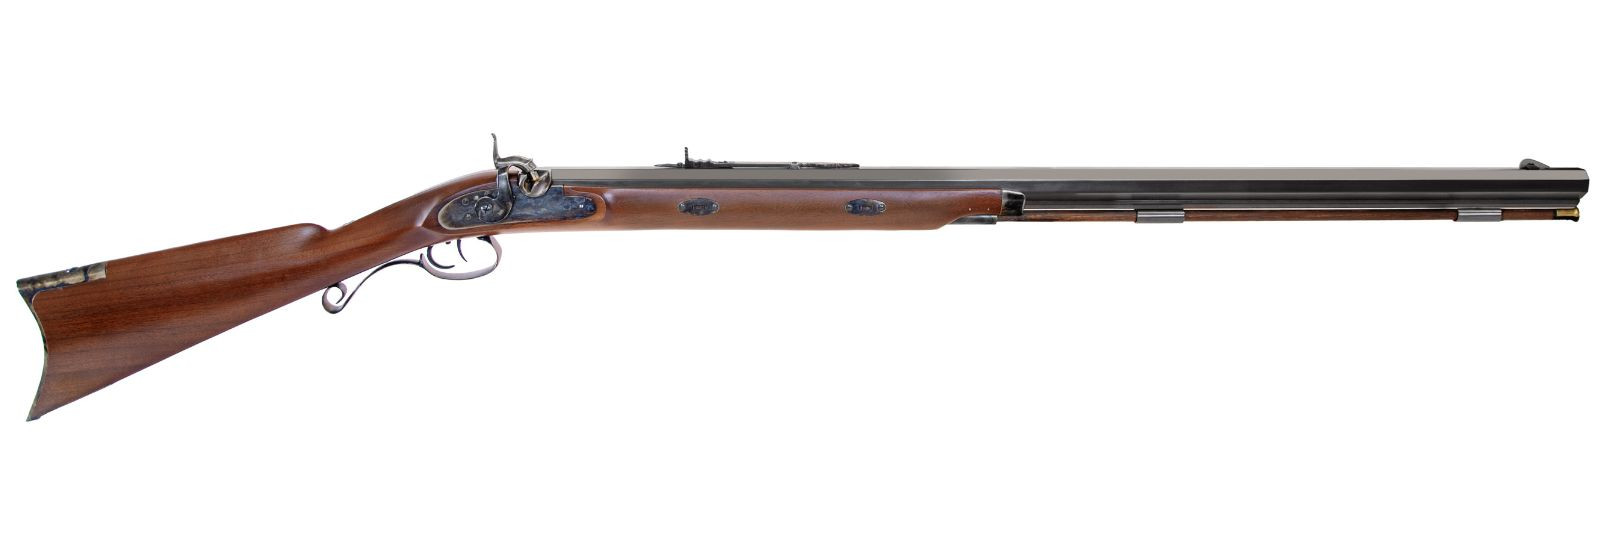 Rocky Mountain Hawken "Walnut" Rifle